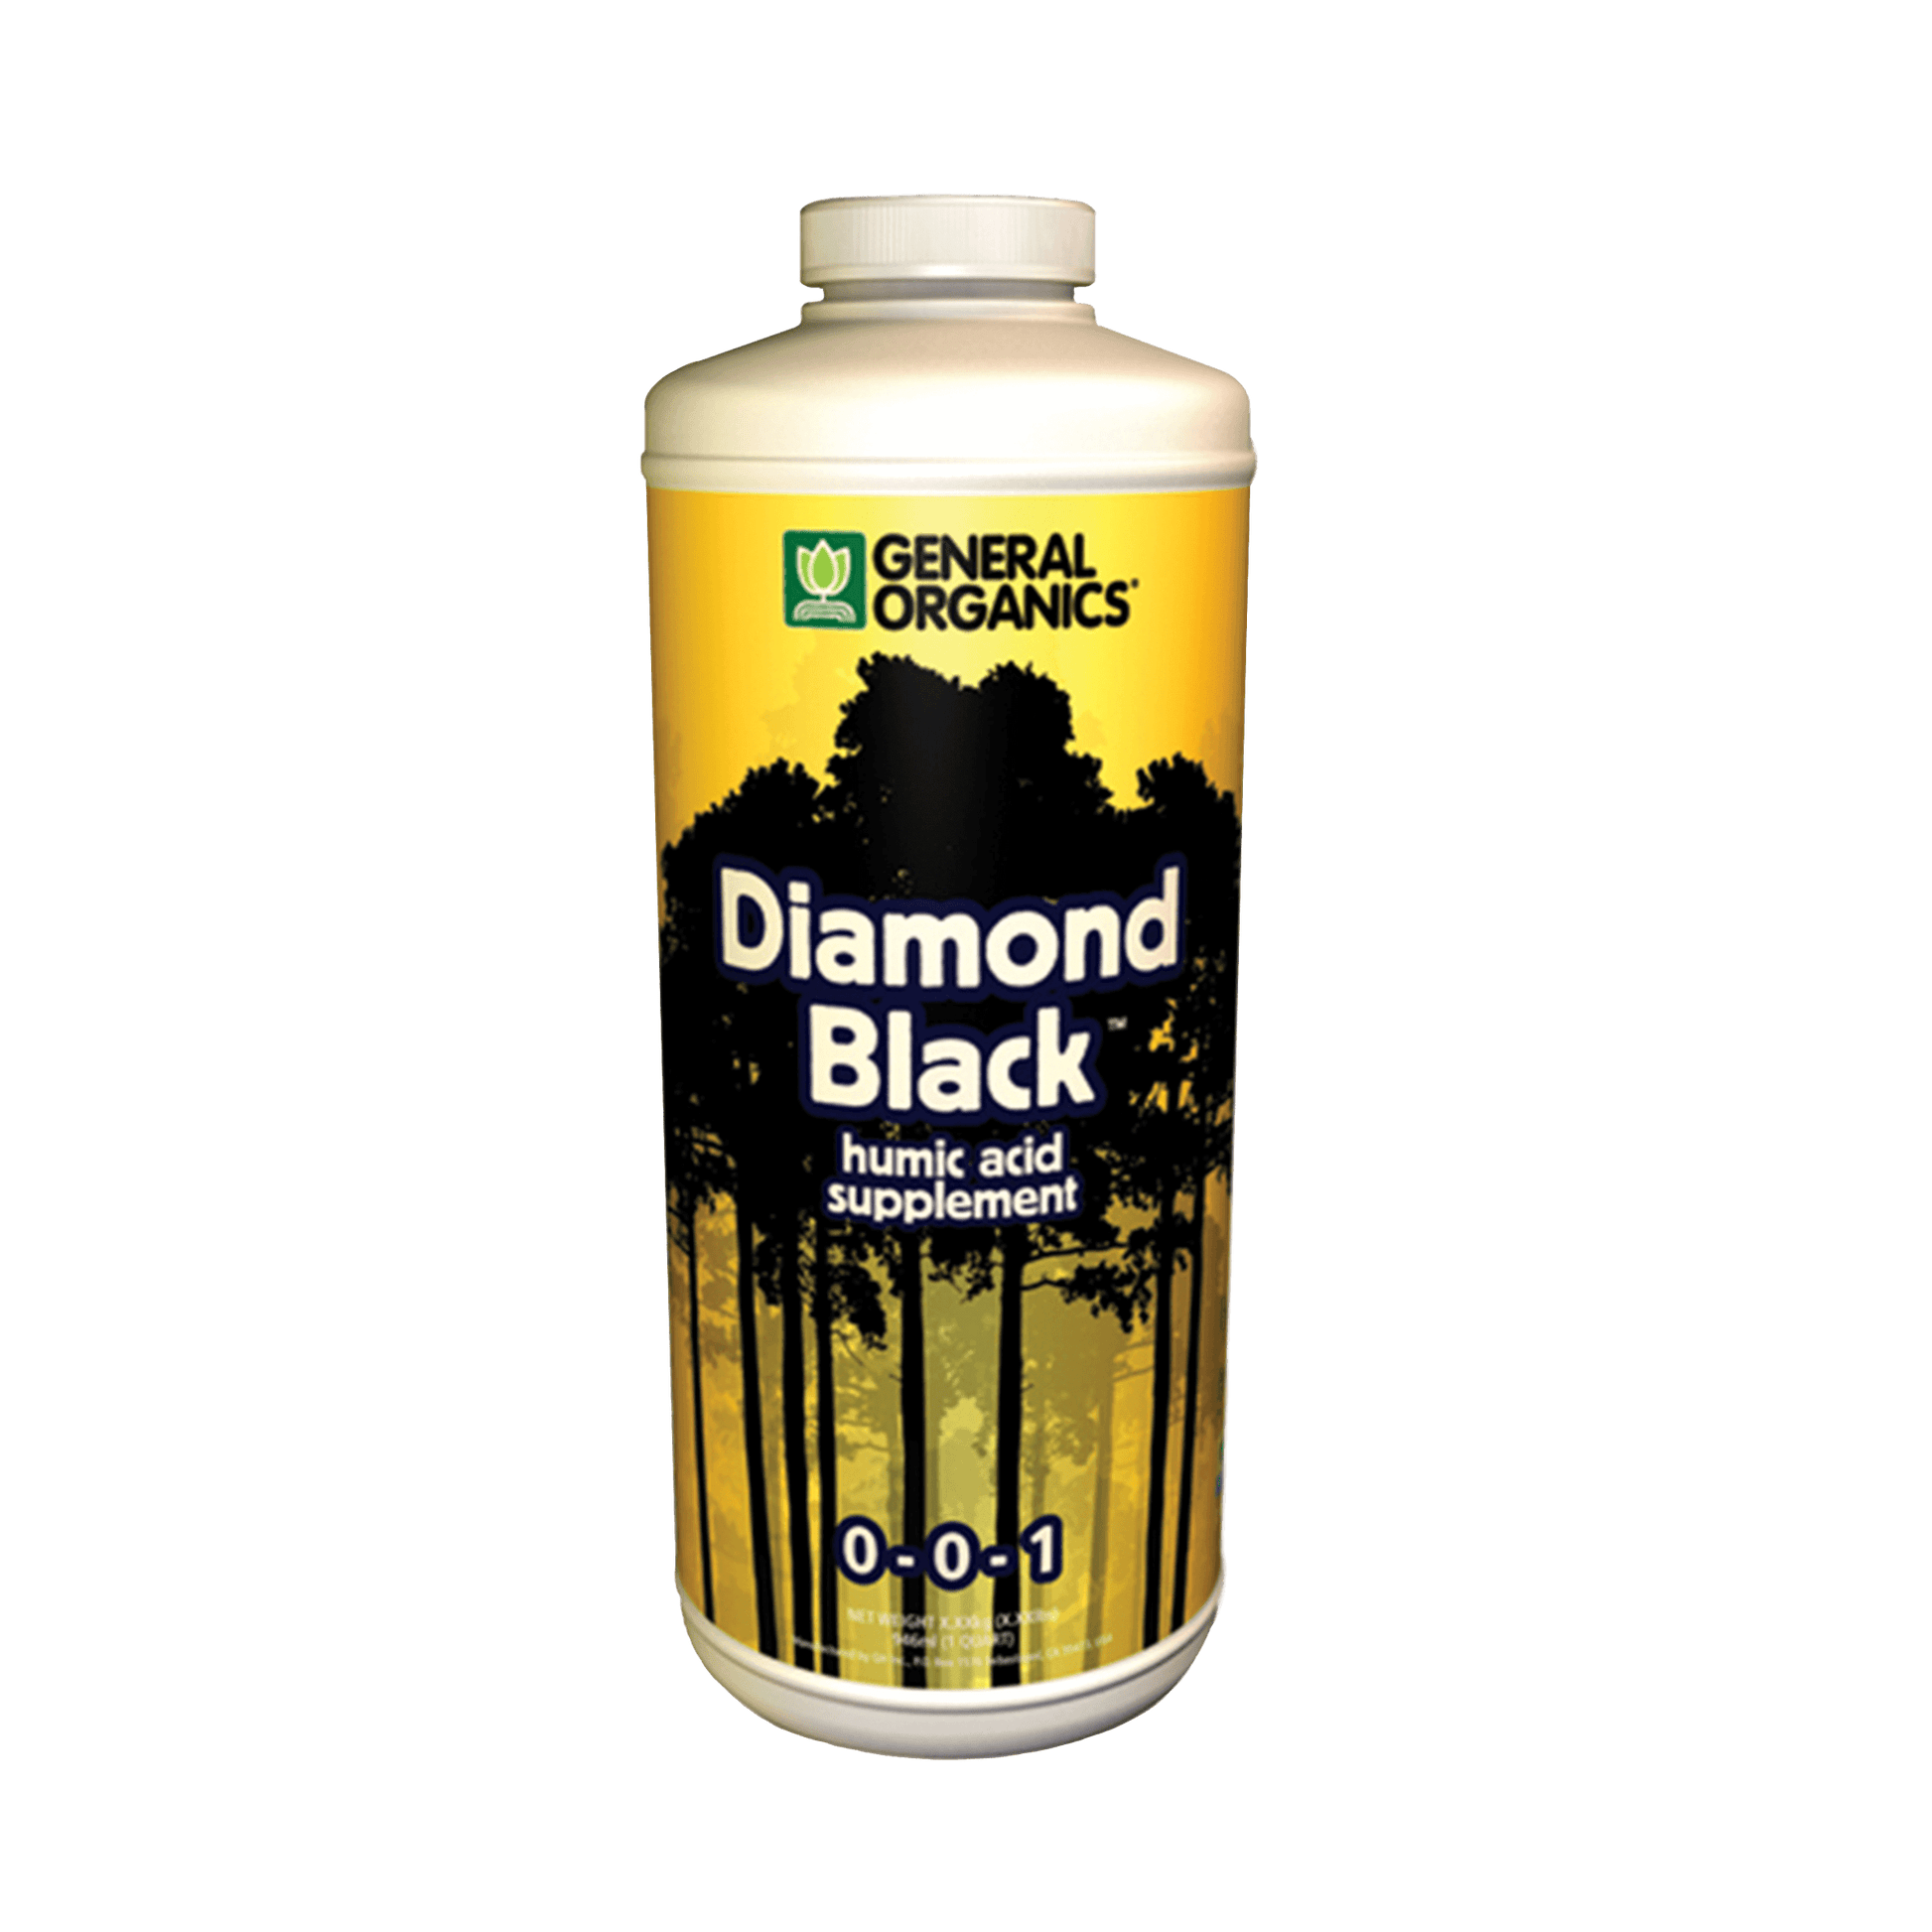 General Organics - Diamond Black México Humicos